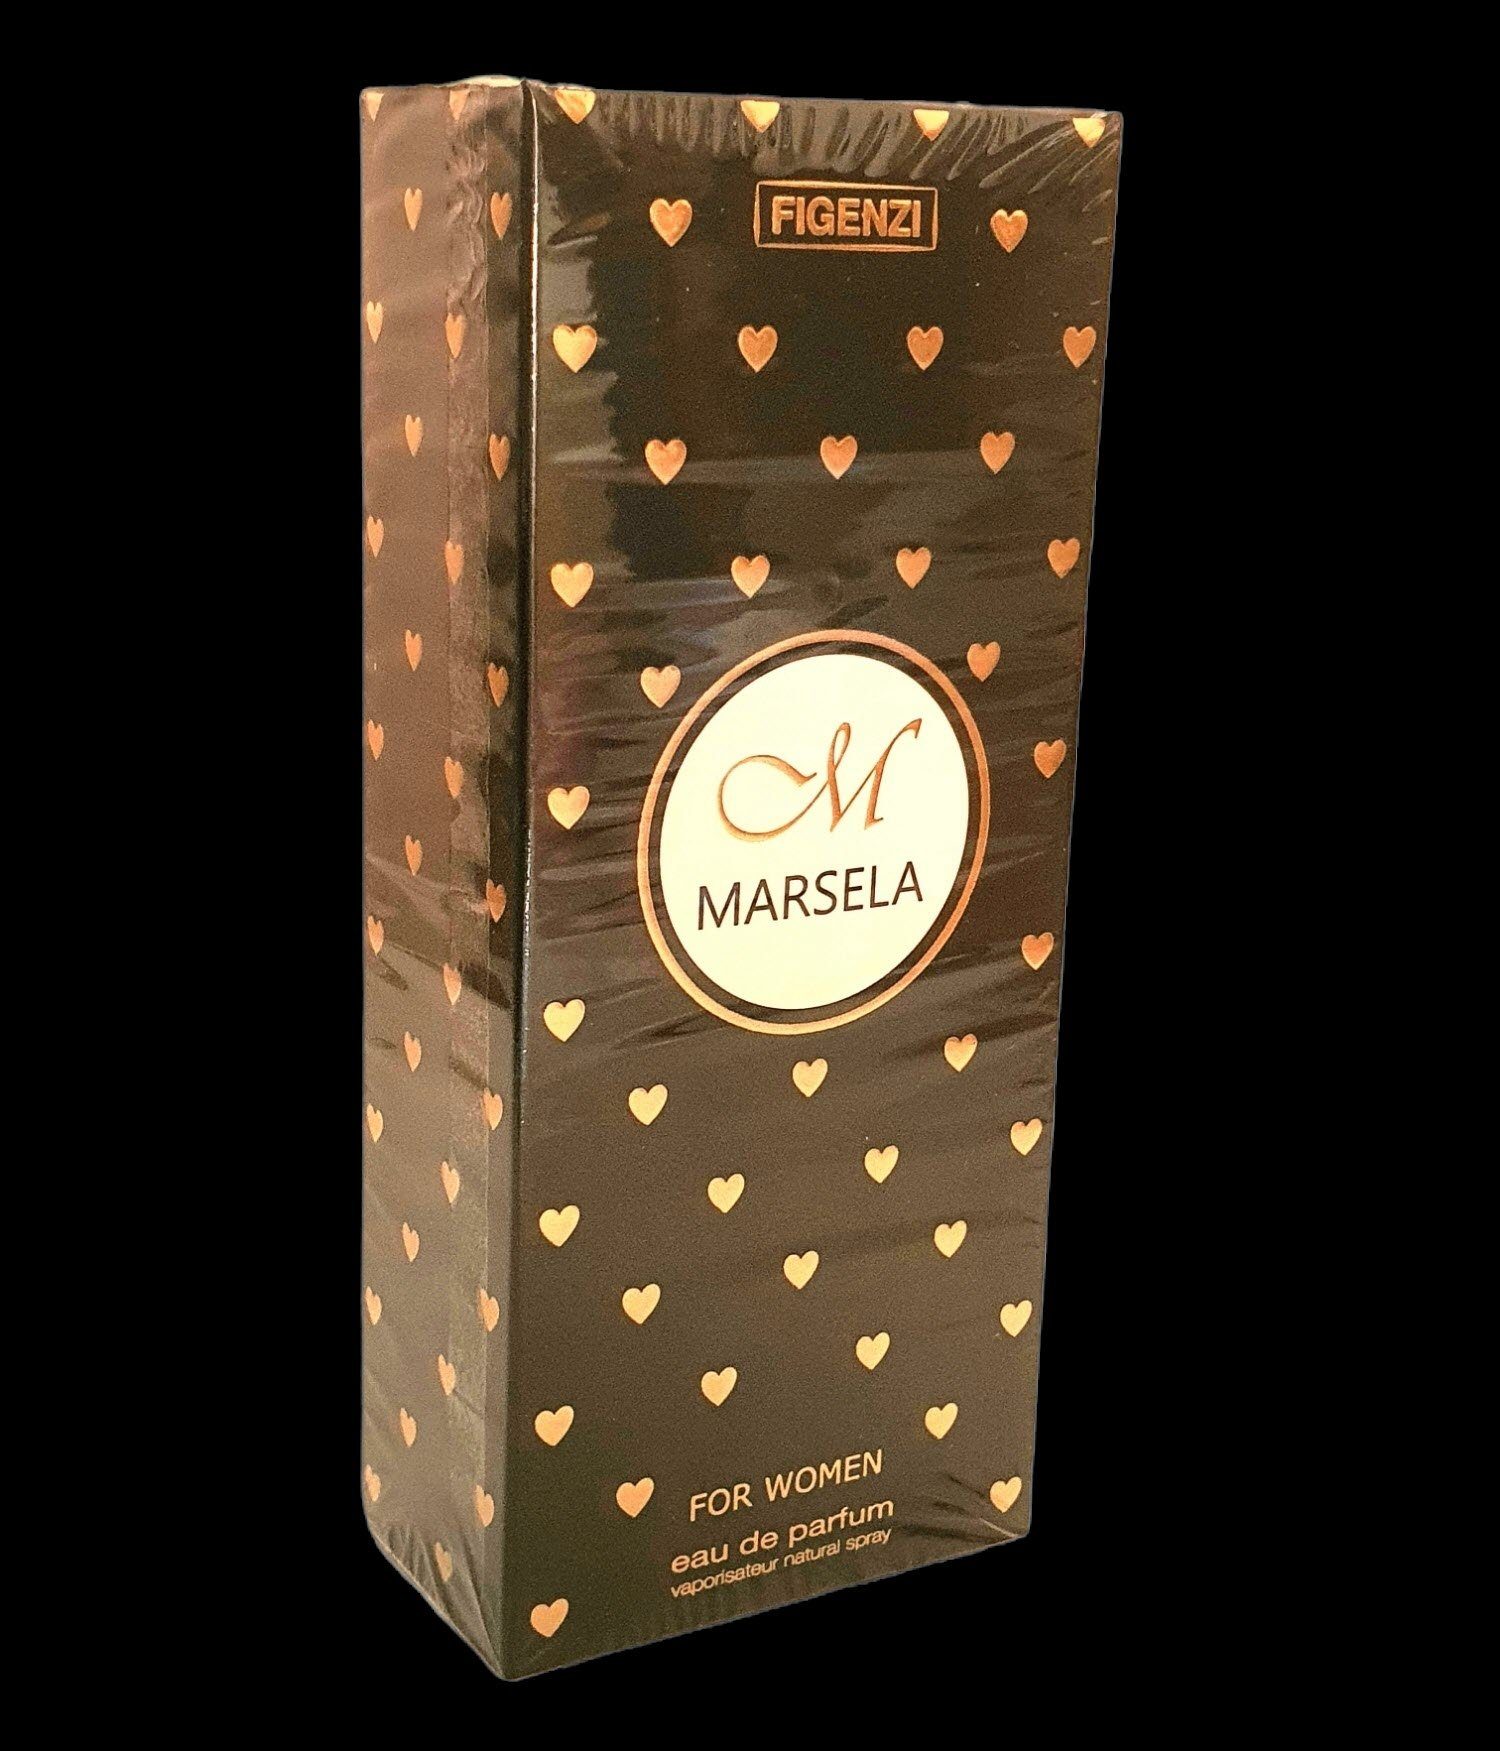 Spectrum Eau de Parfum Figenzi EDP 100 ml Marsela Woman